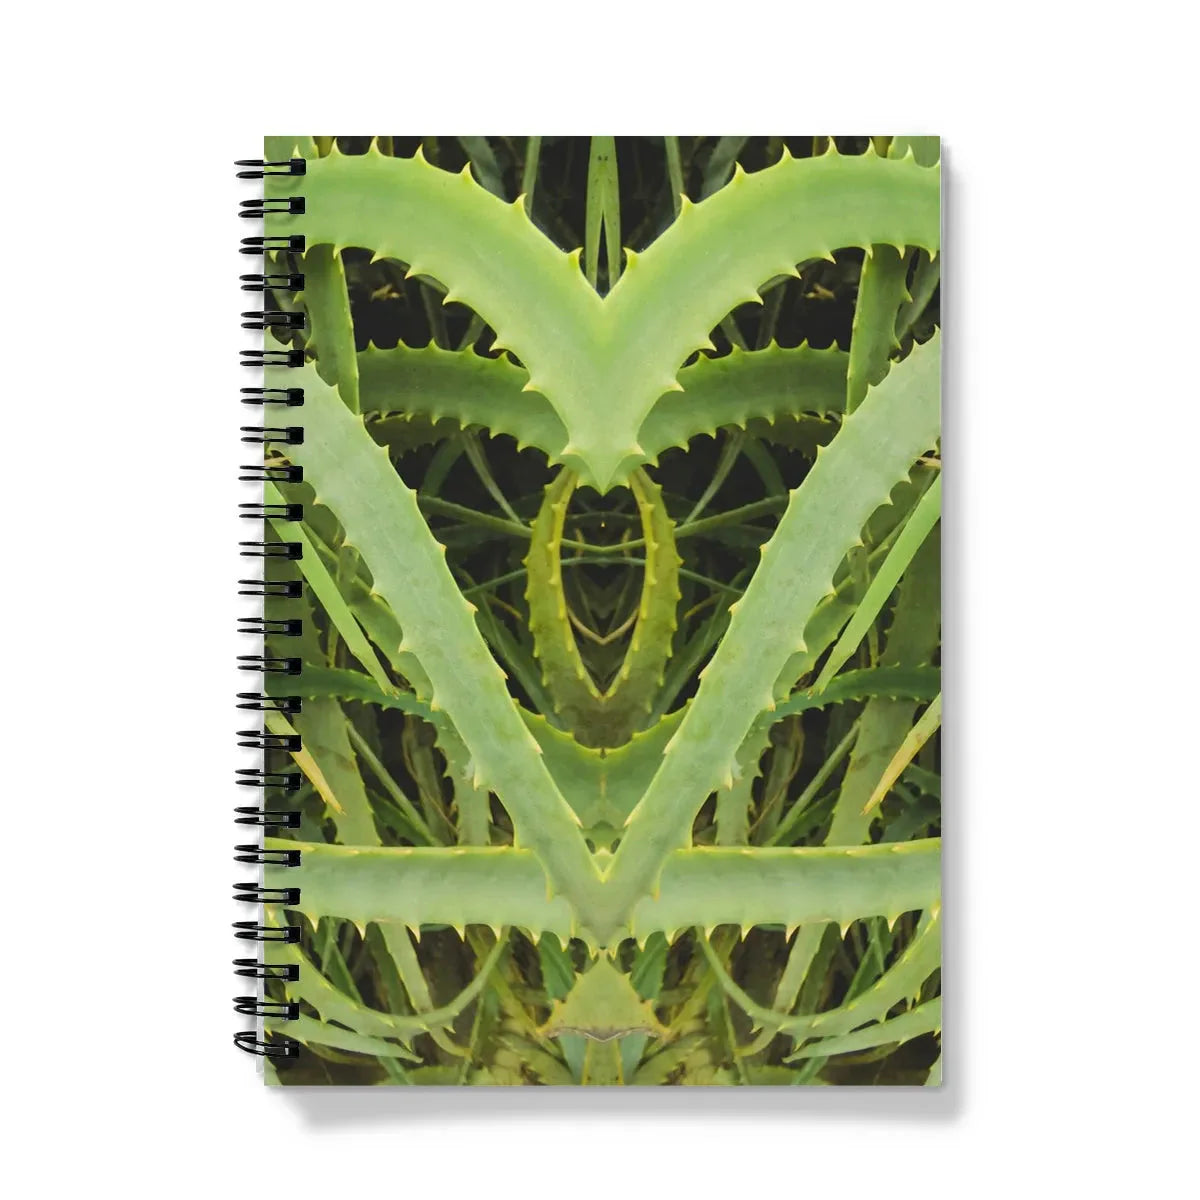 Spiked Notebook - A5 - Graph Paper - Notebooks & Notepads - Aesthetic Art